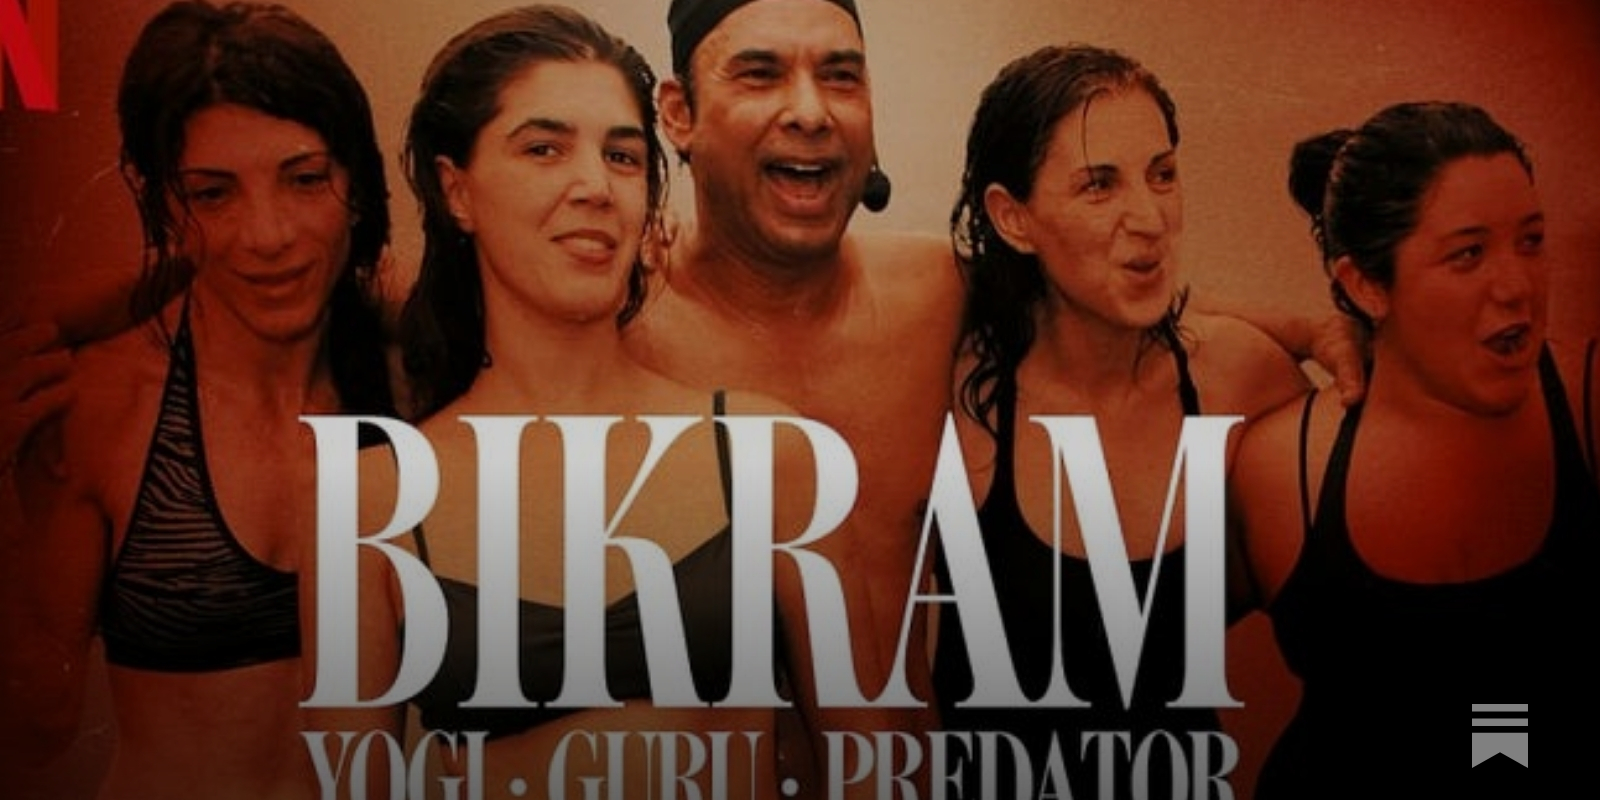 Vancouver hot yoga studio feels blowback from scathing Bikram